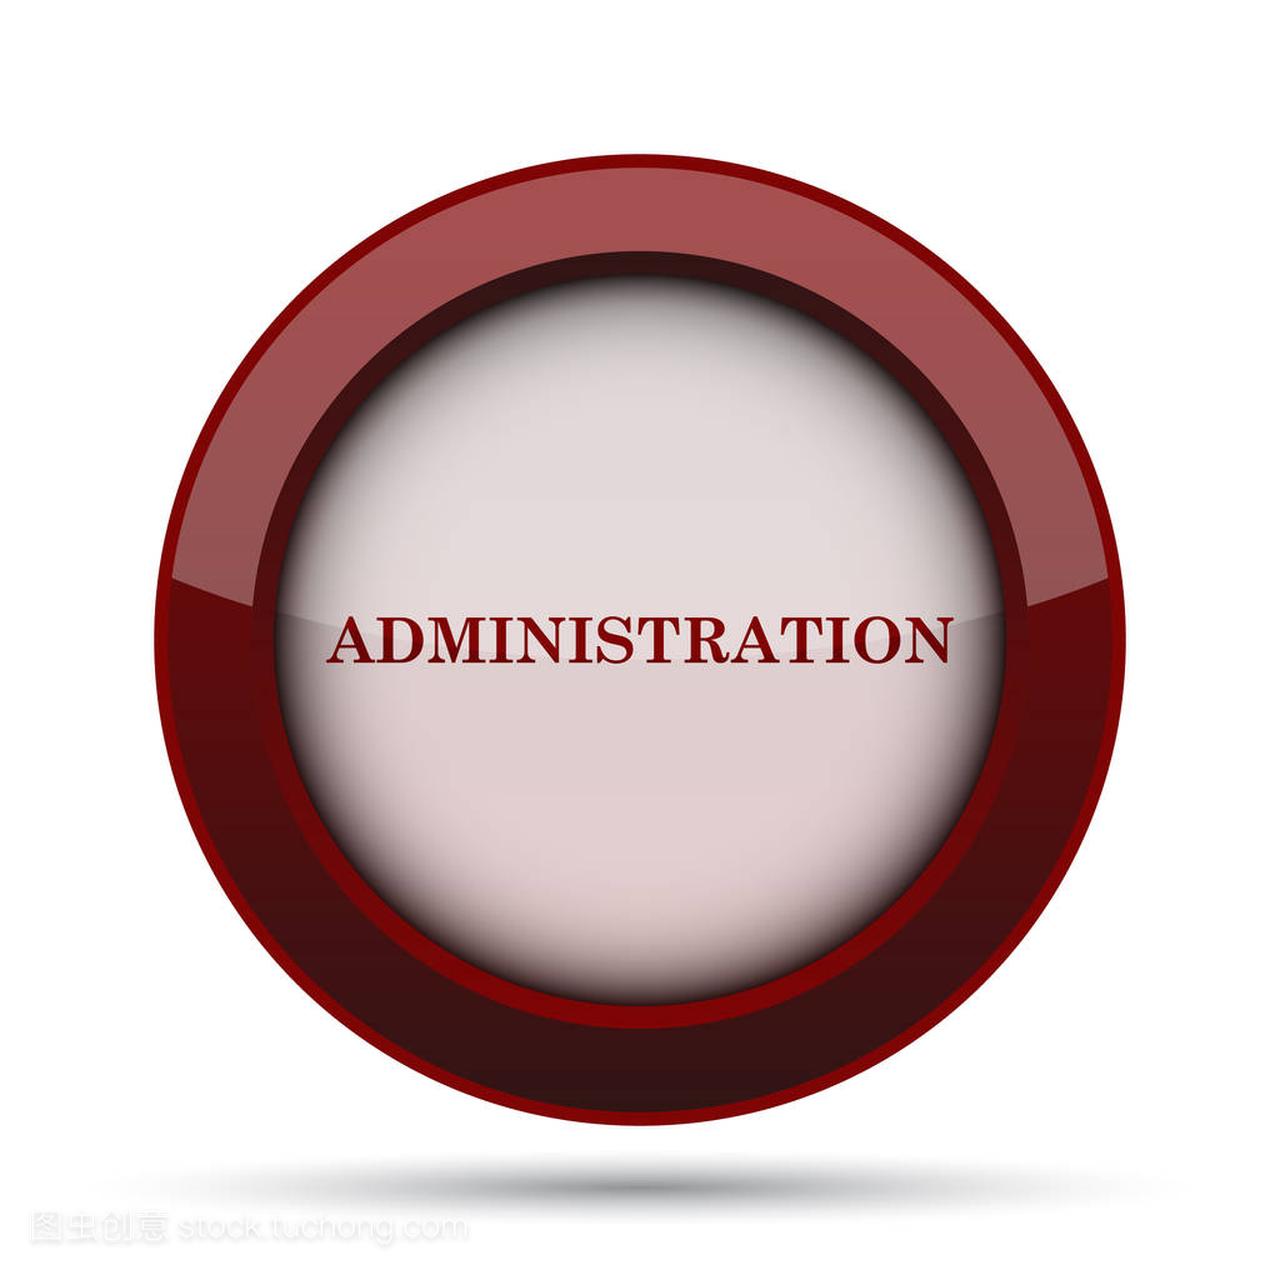 Administration icon